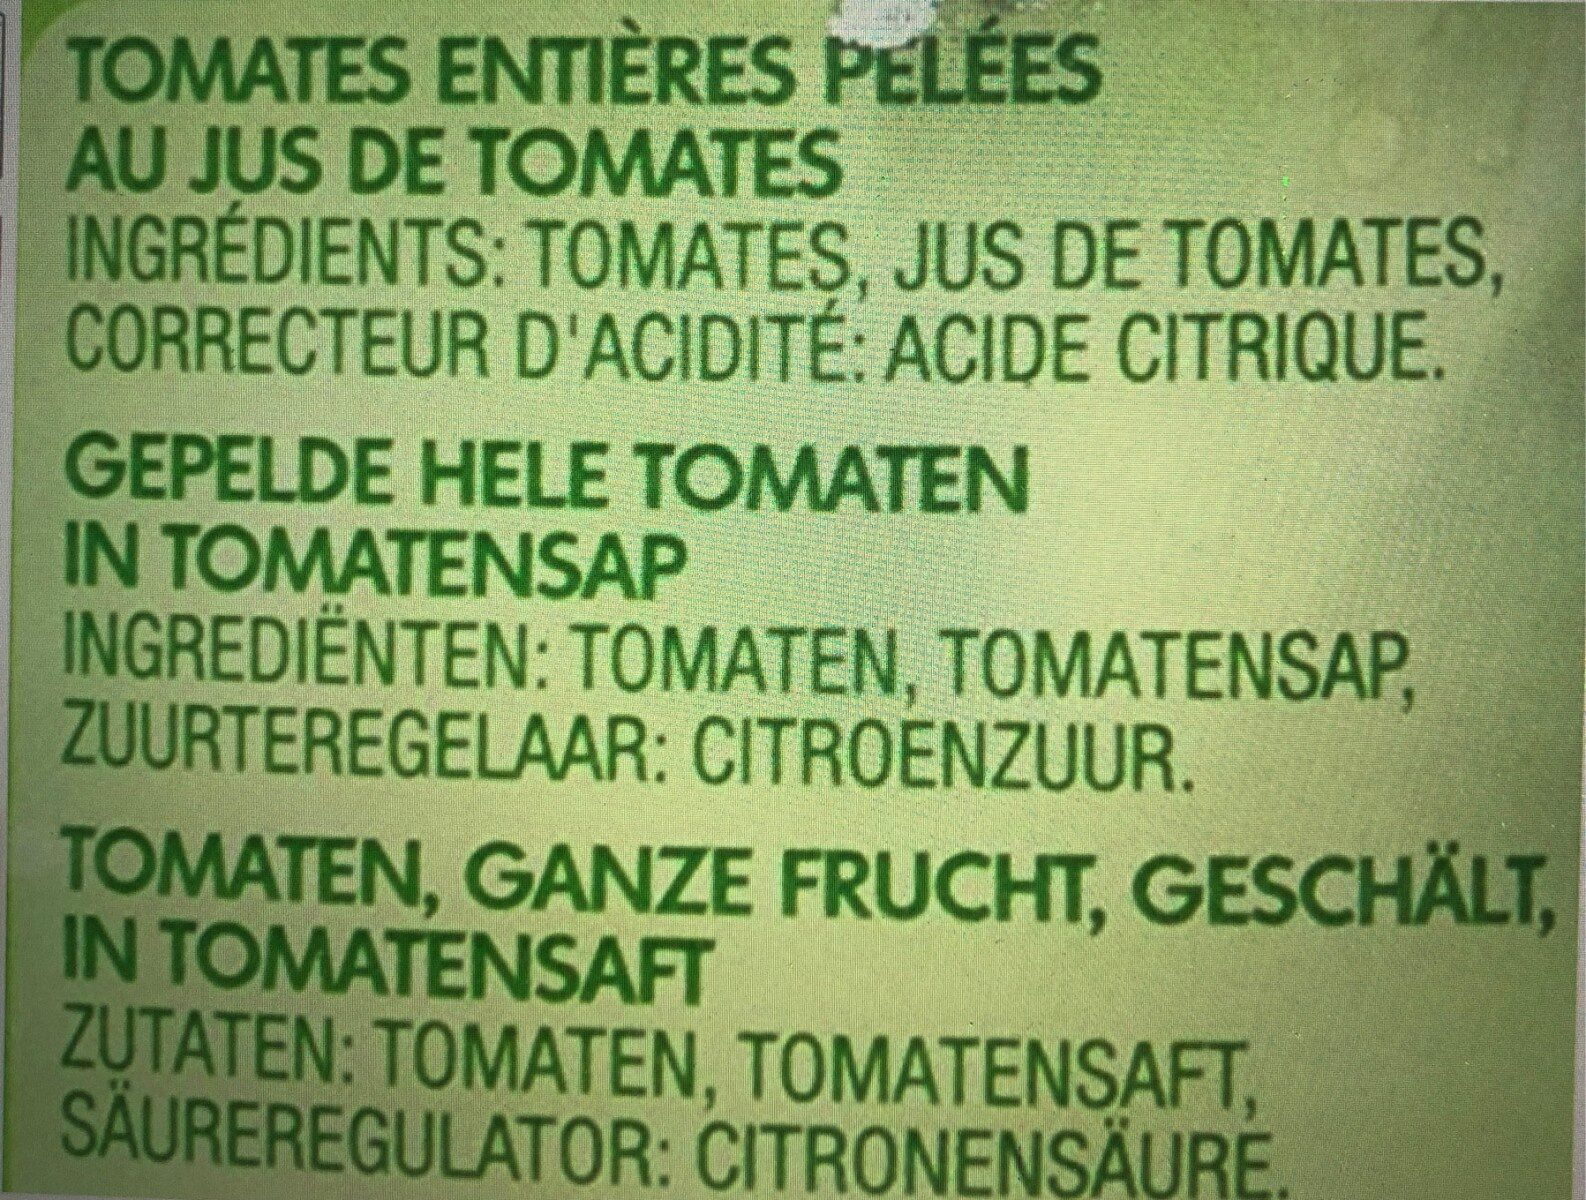 Tomates pelées - Zutaten - en